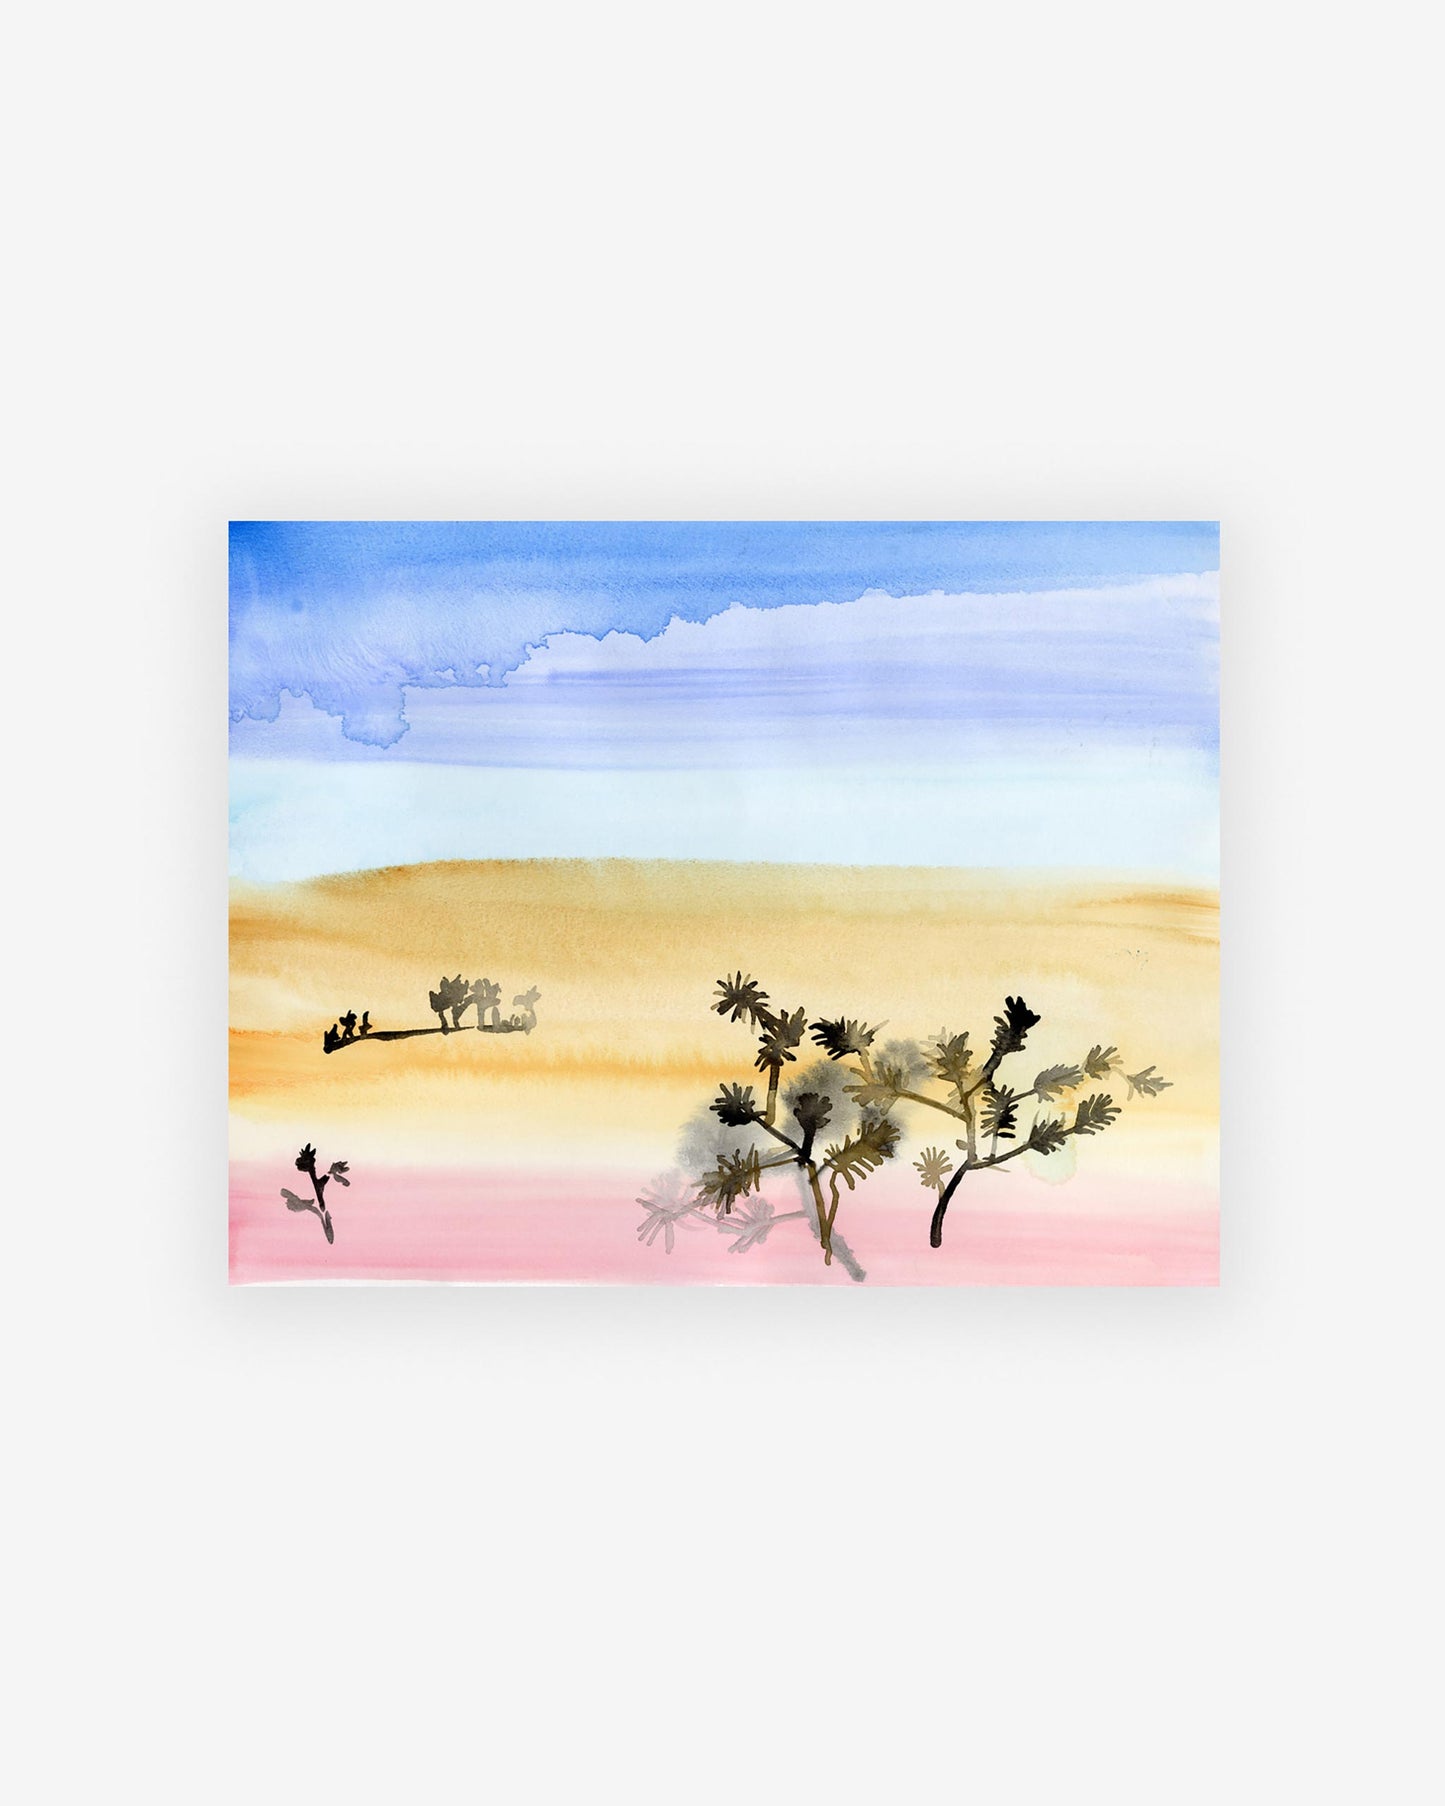 A Shore Pine Print 14" x 11" by the artist, Eskayel founder, showcasing a desert landscape